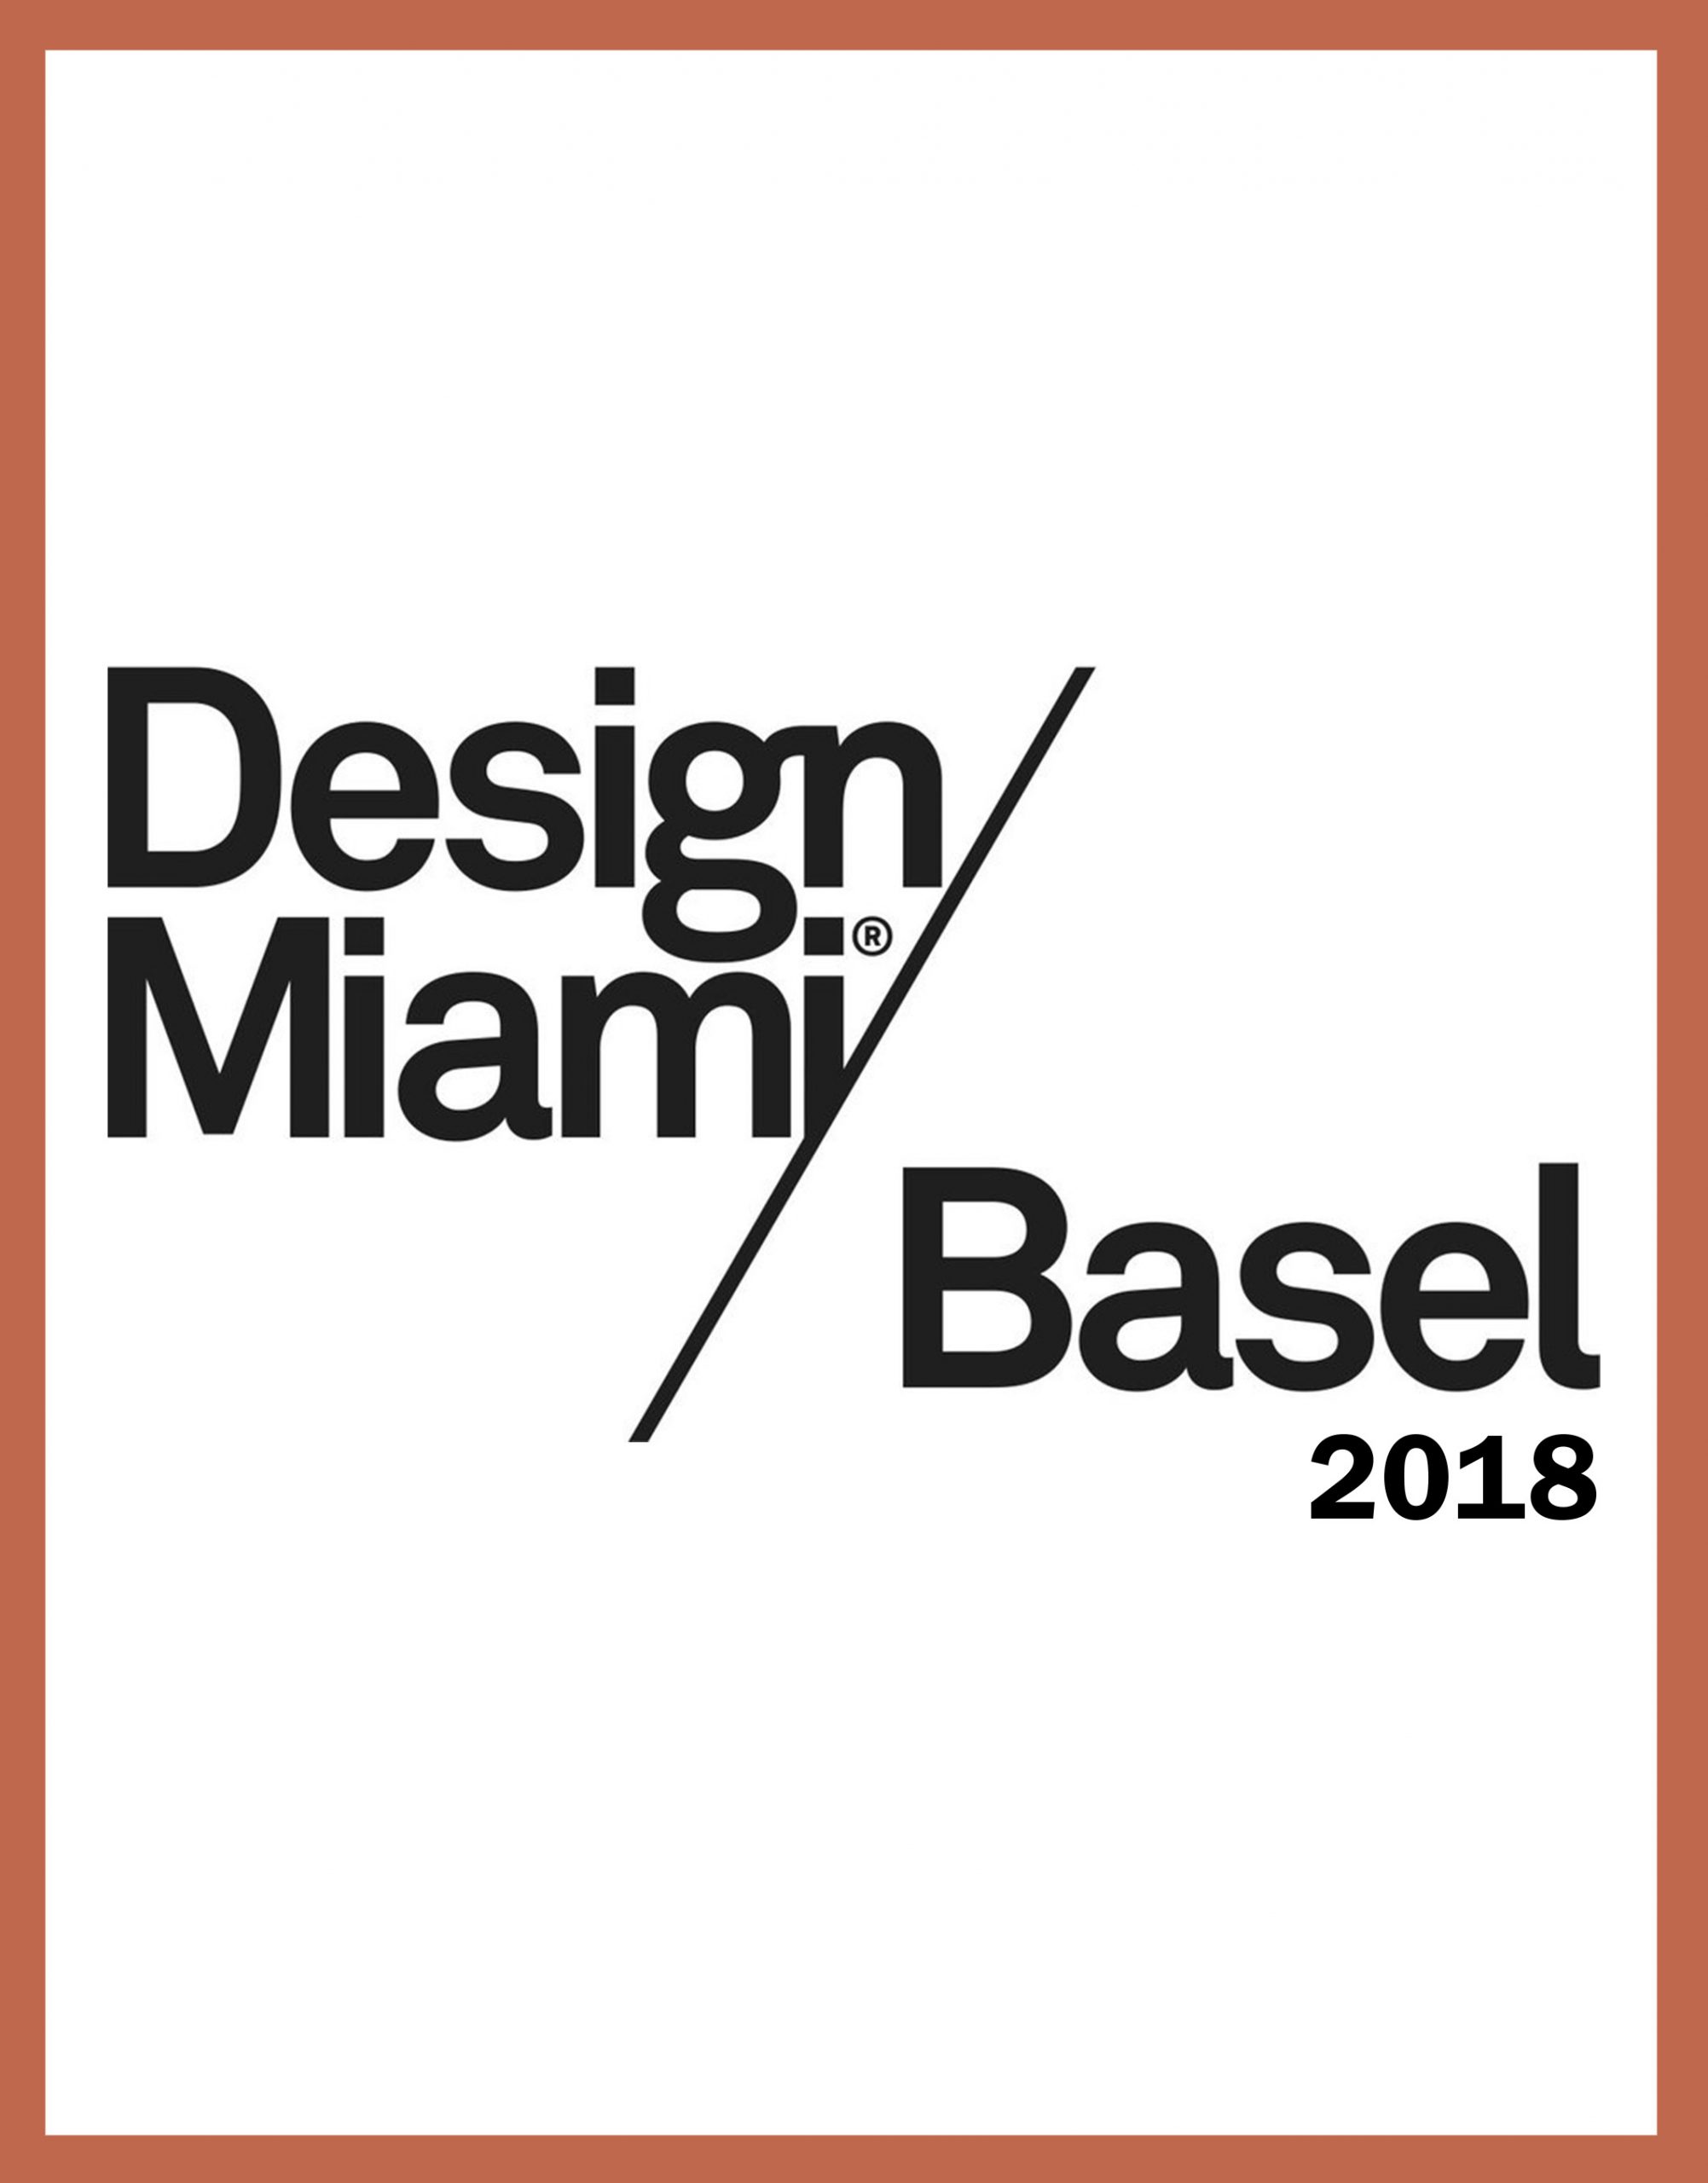 Hella Jongerius - Design Miami / Basel 2018